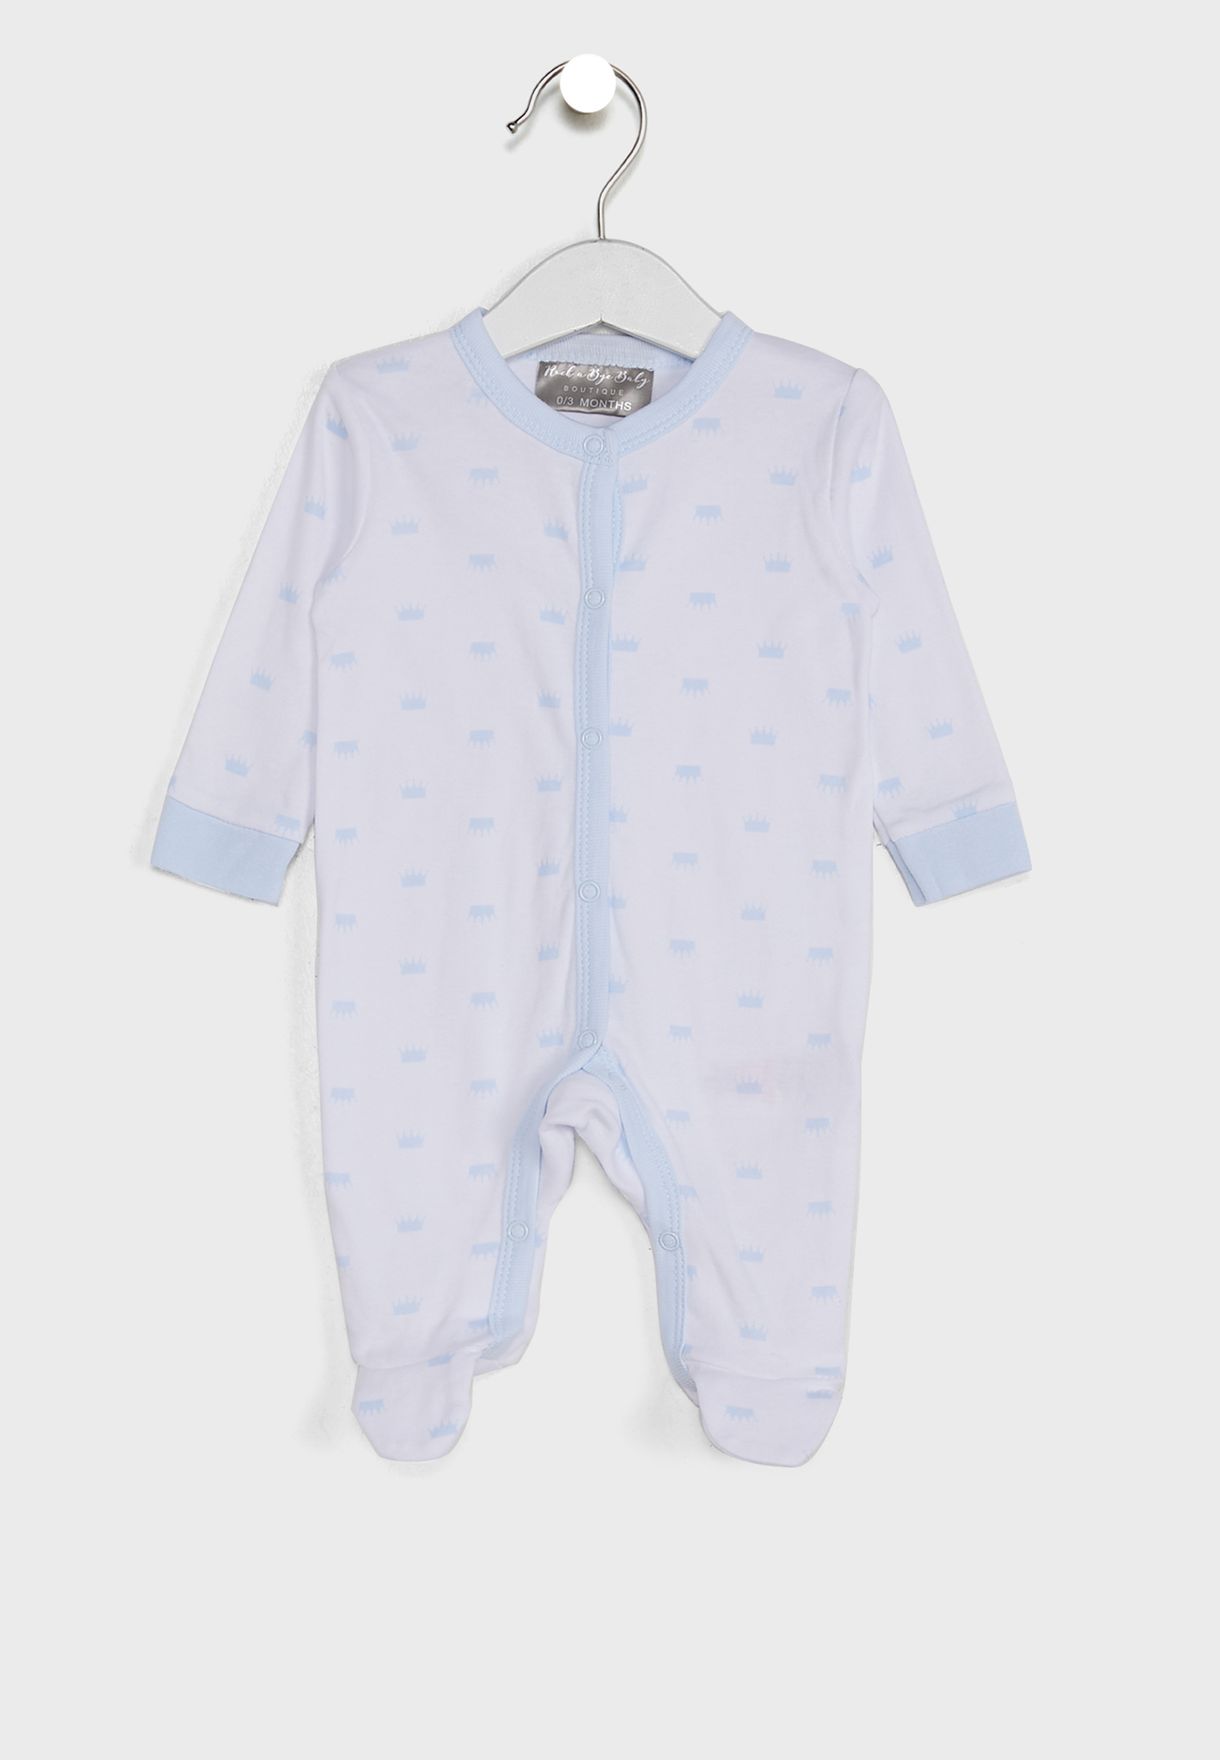 Infant Crown Sleep suit + Hat Bib Set